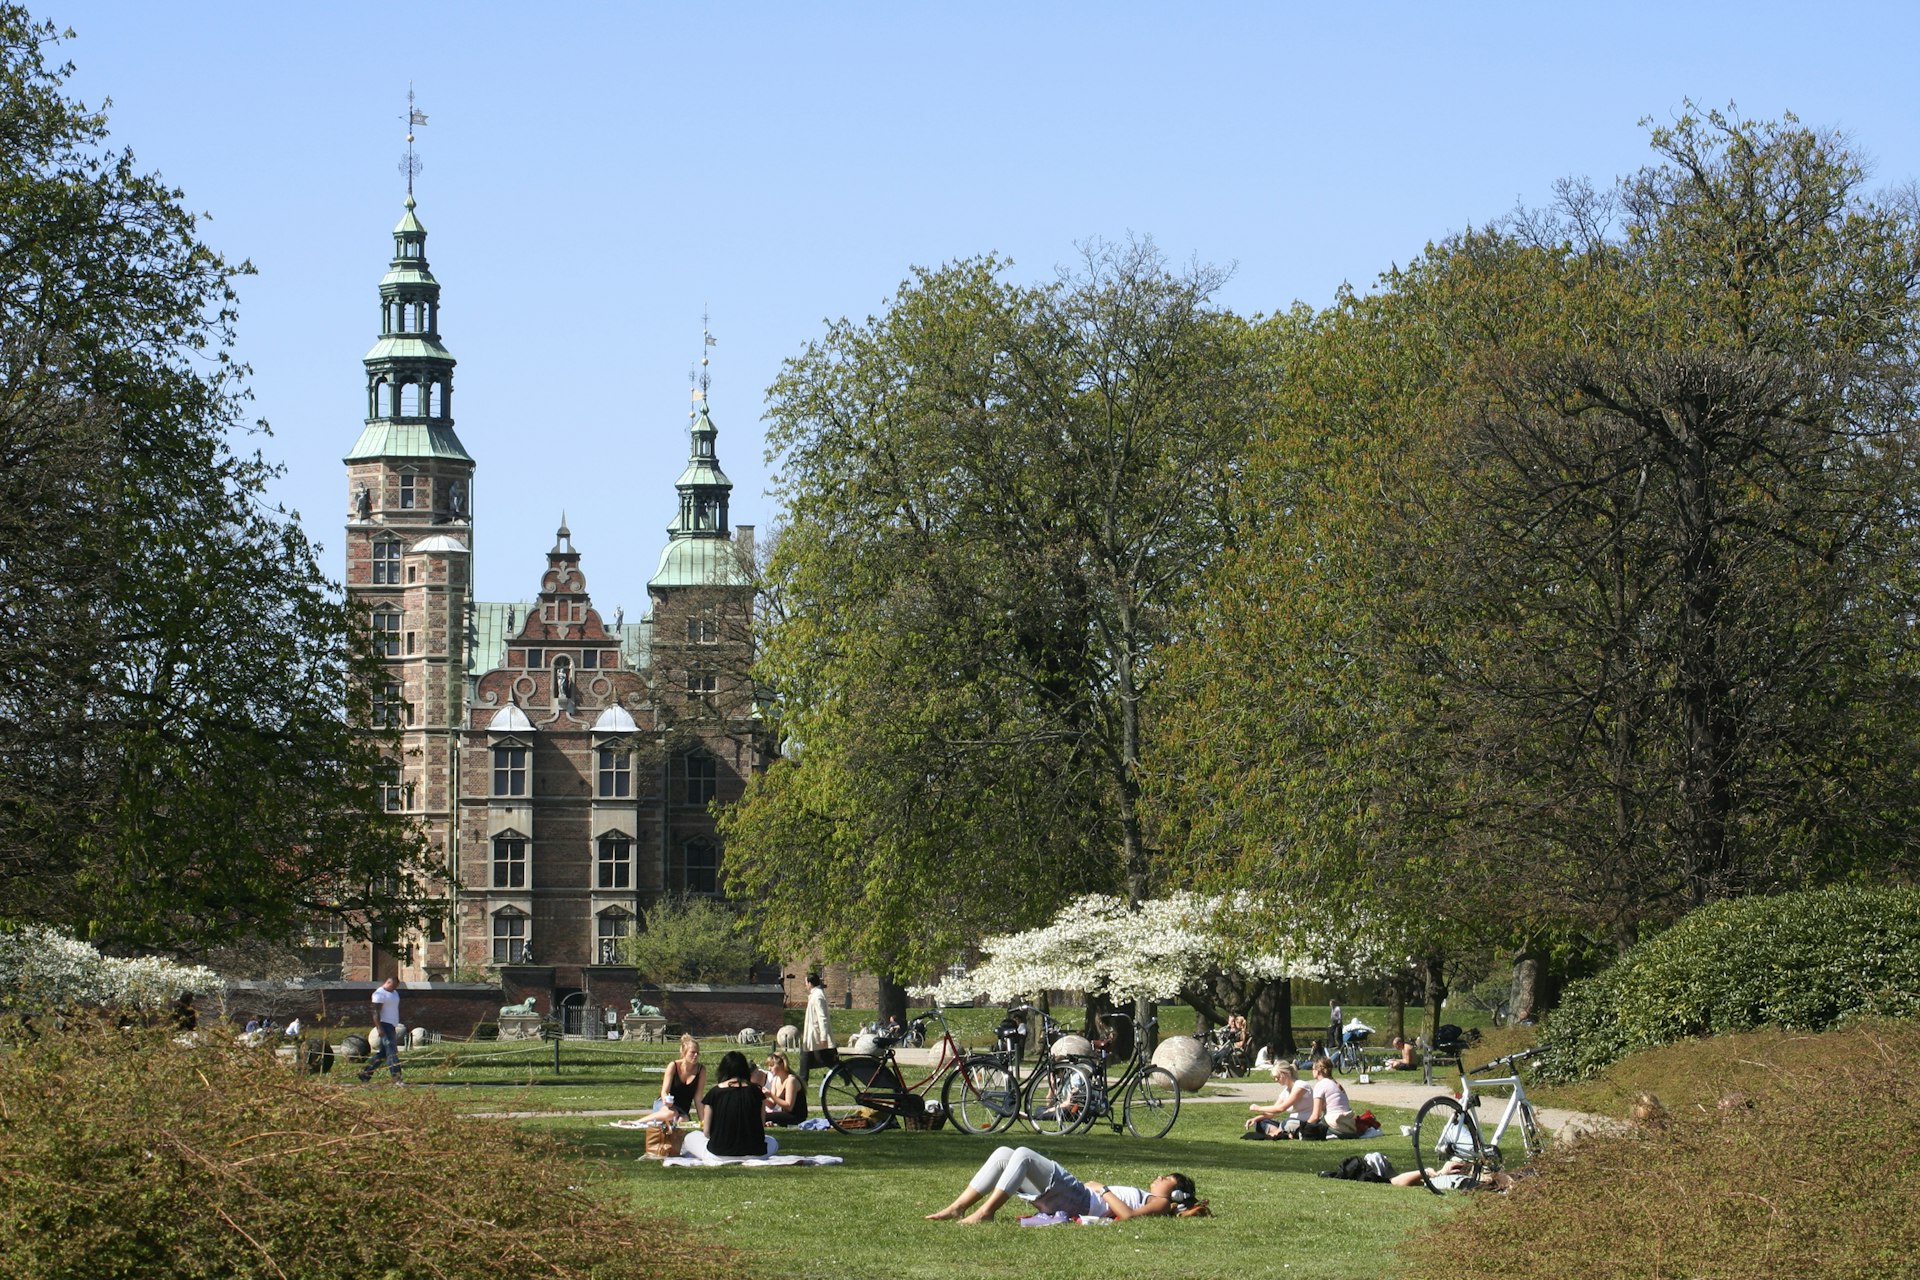 People relaxing in the grounds of the Rosenberg Slot, Copenhagen